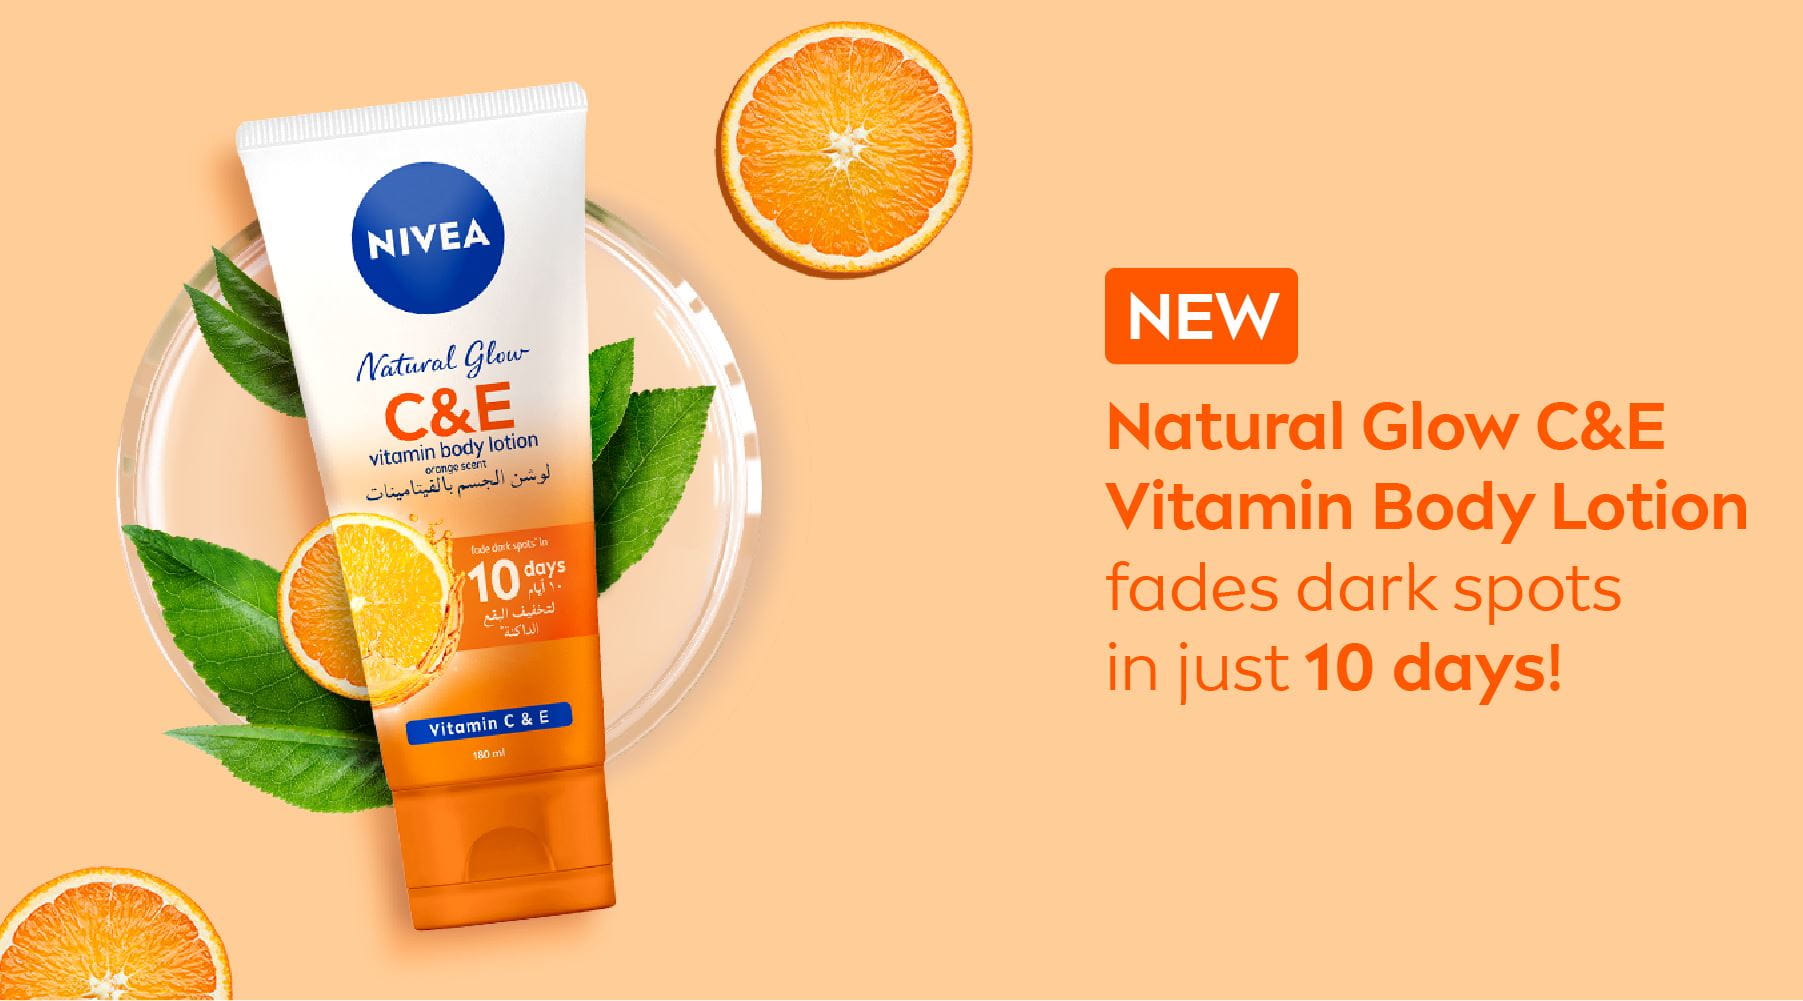 NIVEA Natural Glow C&E Vitamin Body Lotion